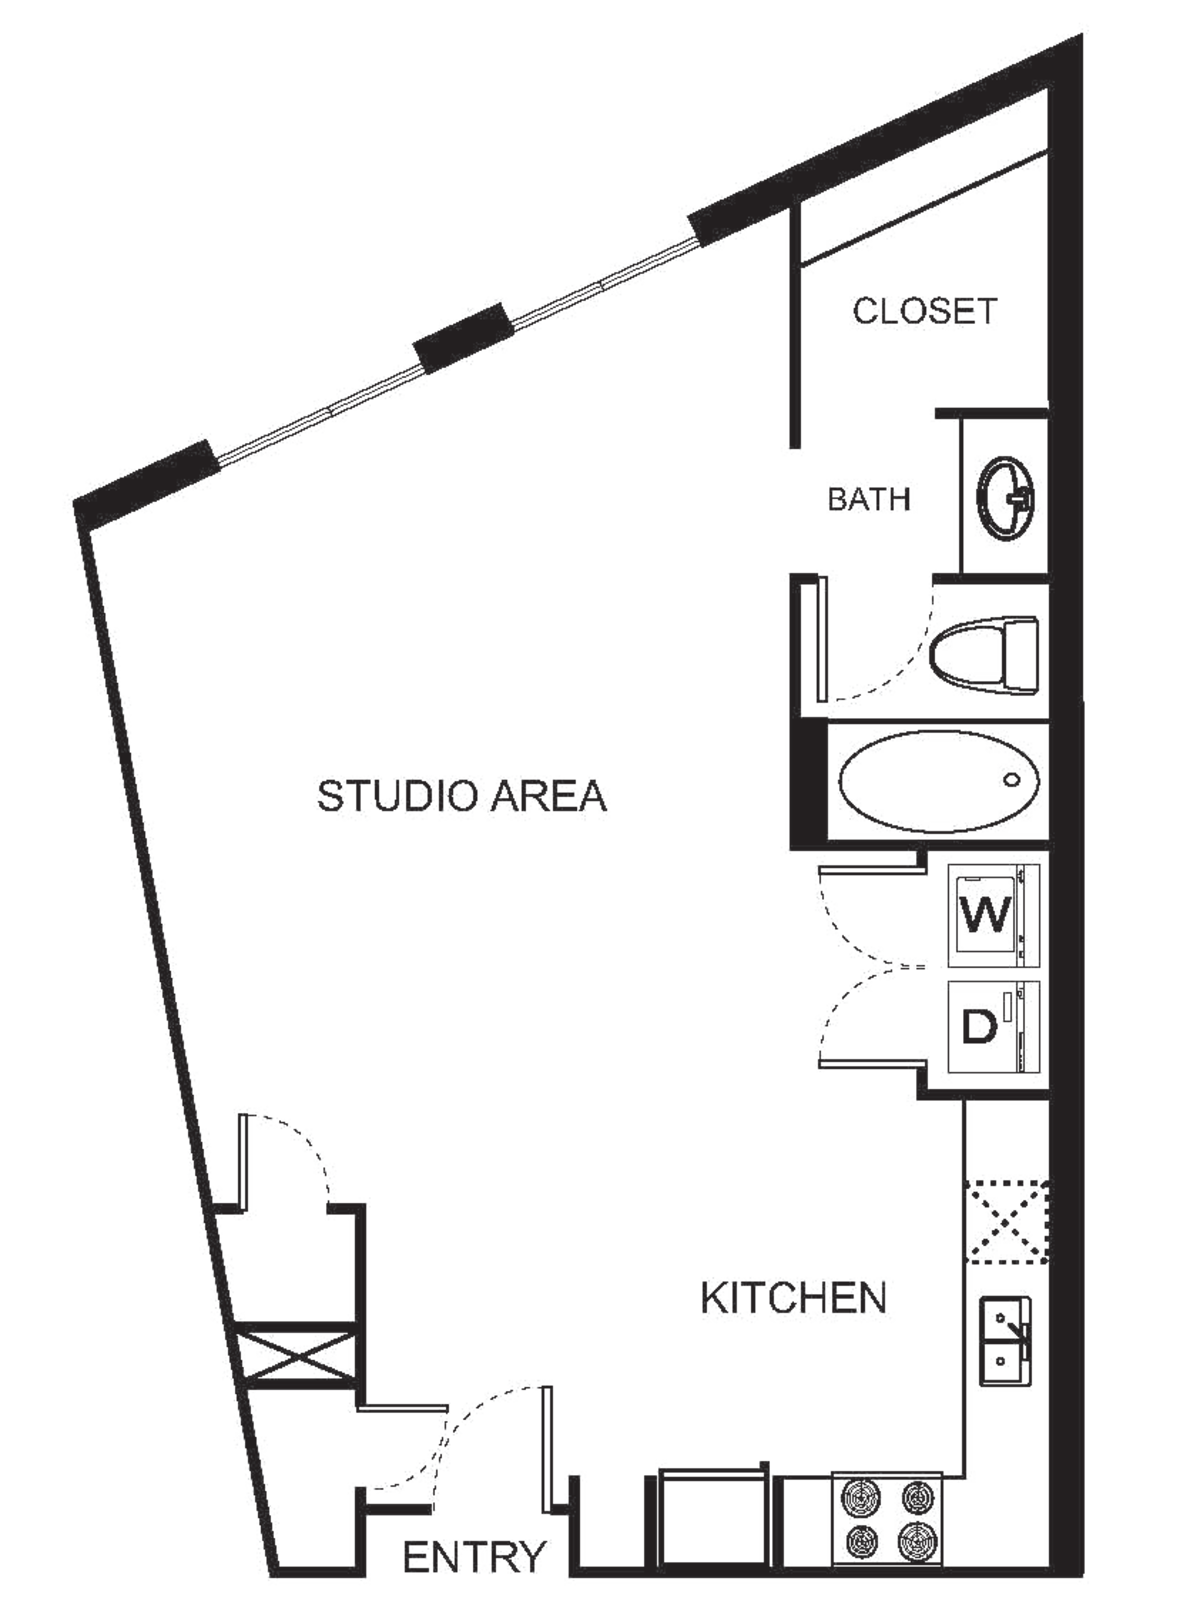 Floorplan diagram for OB Studio, showing Studio